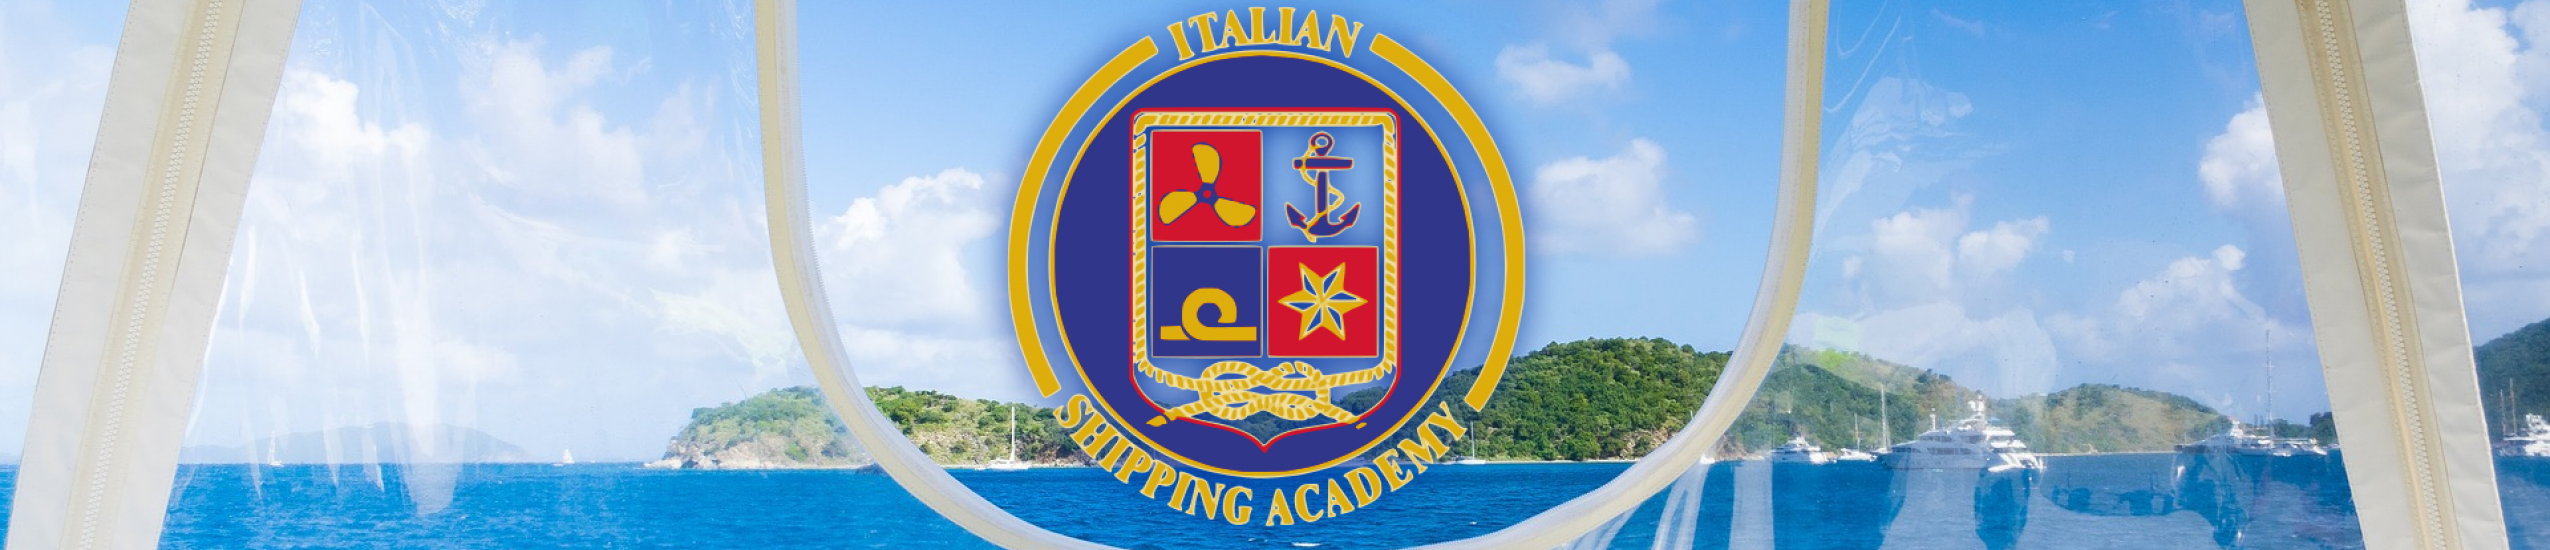 ITS - Accademia Italiana Marina Mercantile